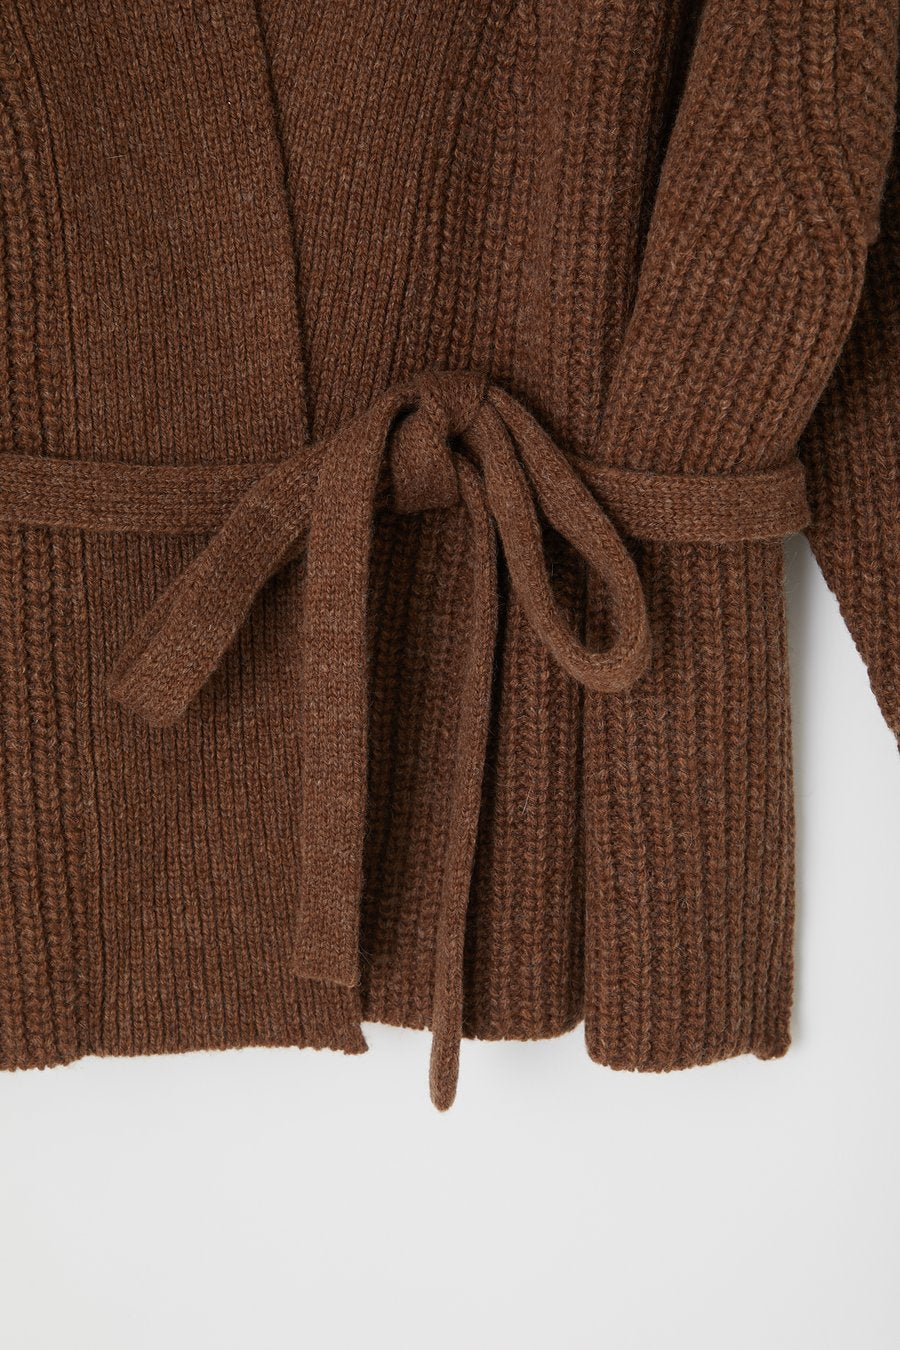 Moussy Denim - MV Short Knit Cardigan in Brown